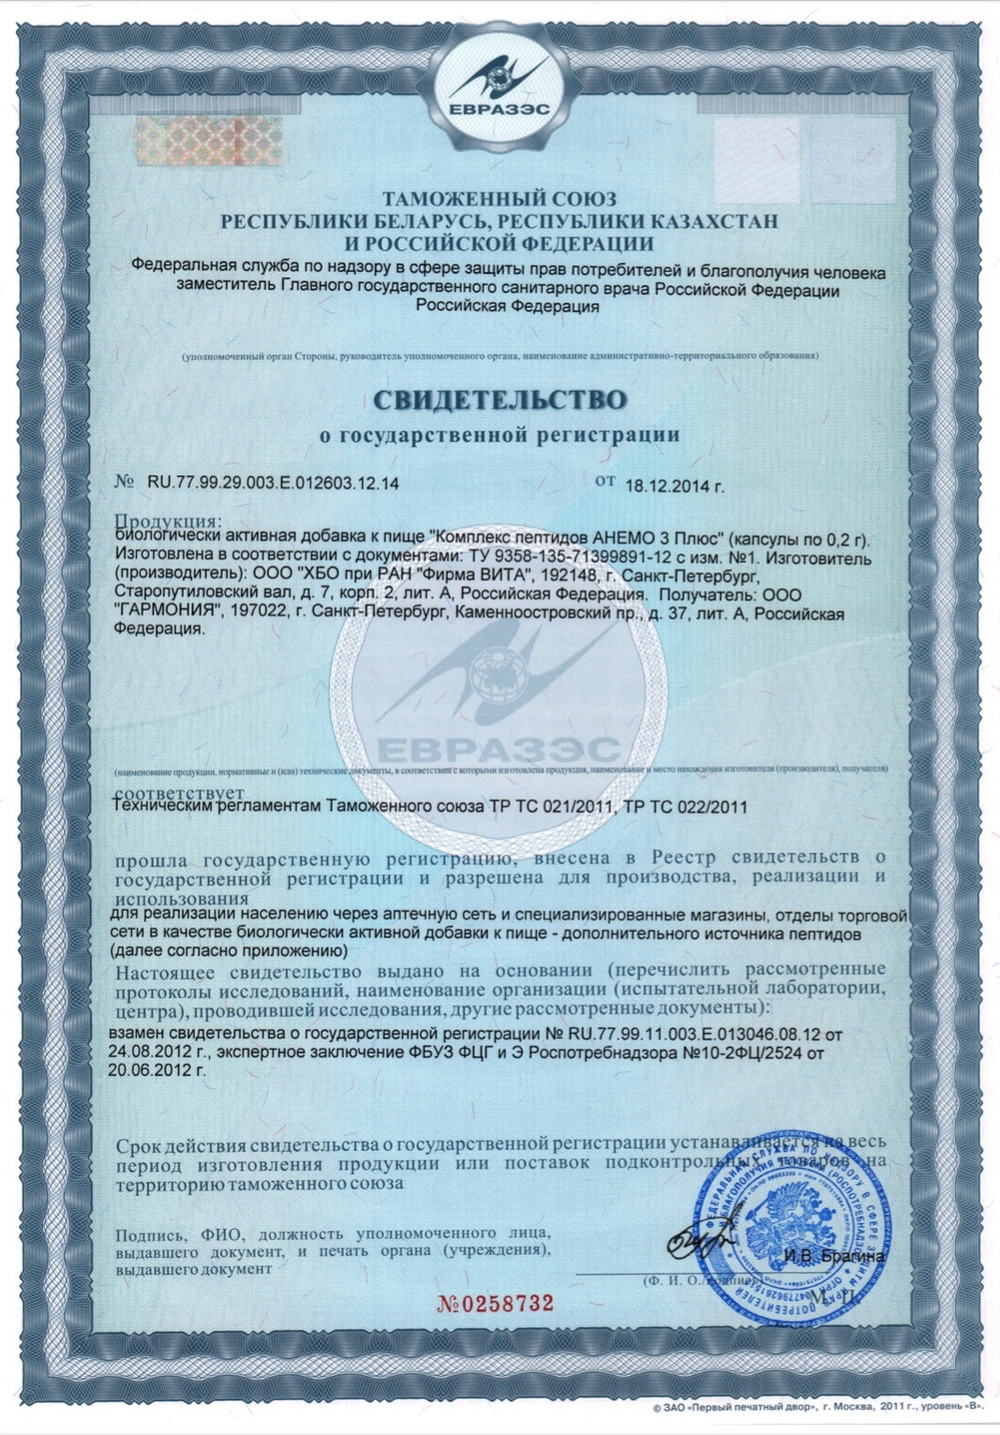 ANEMO 3 Plus® сертификат на пептиды